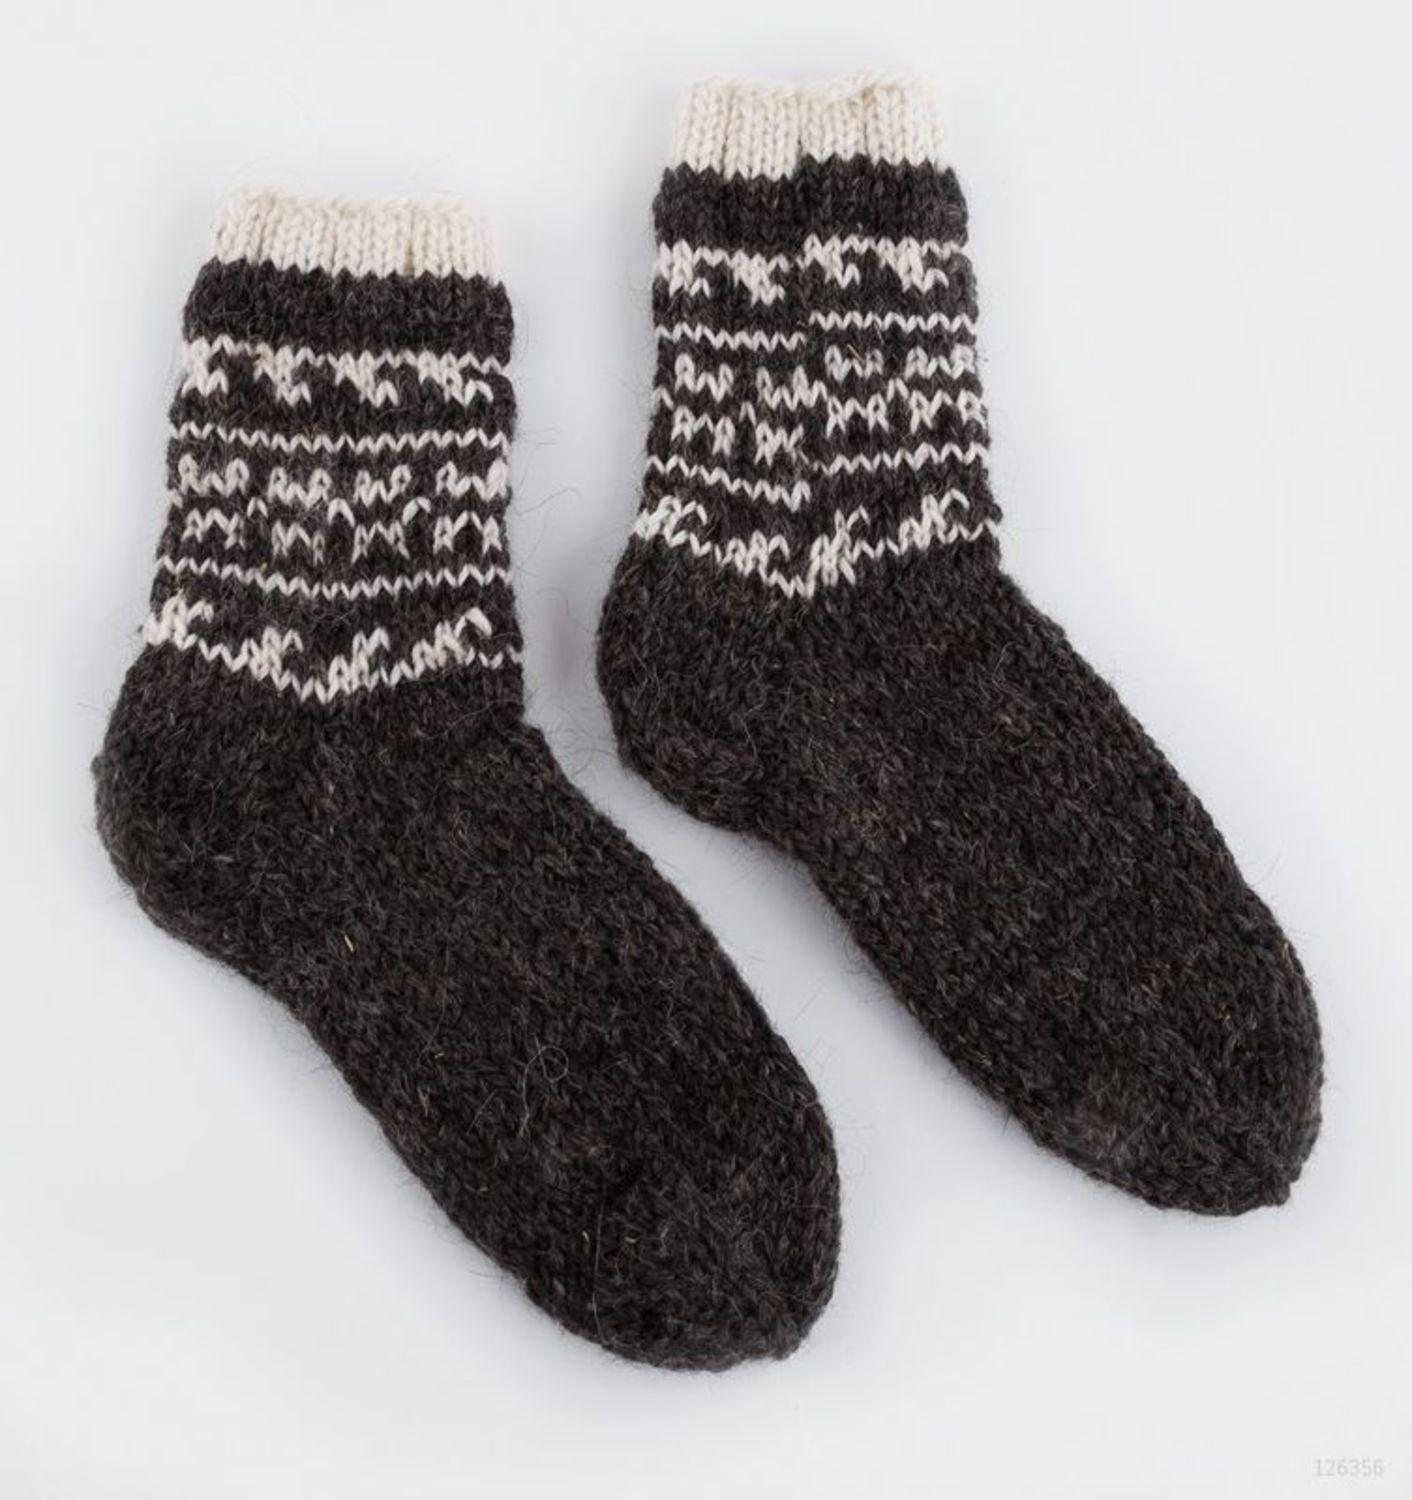 Woolen socks for men photo 2